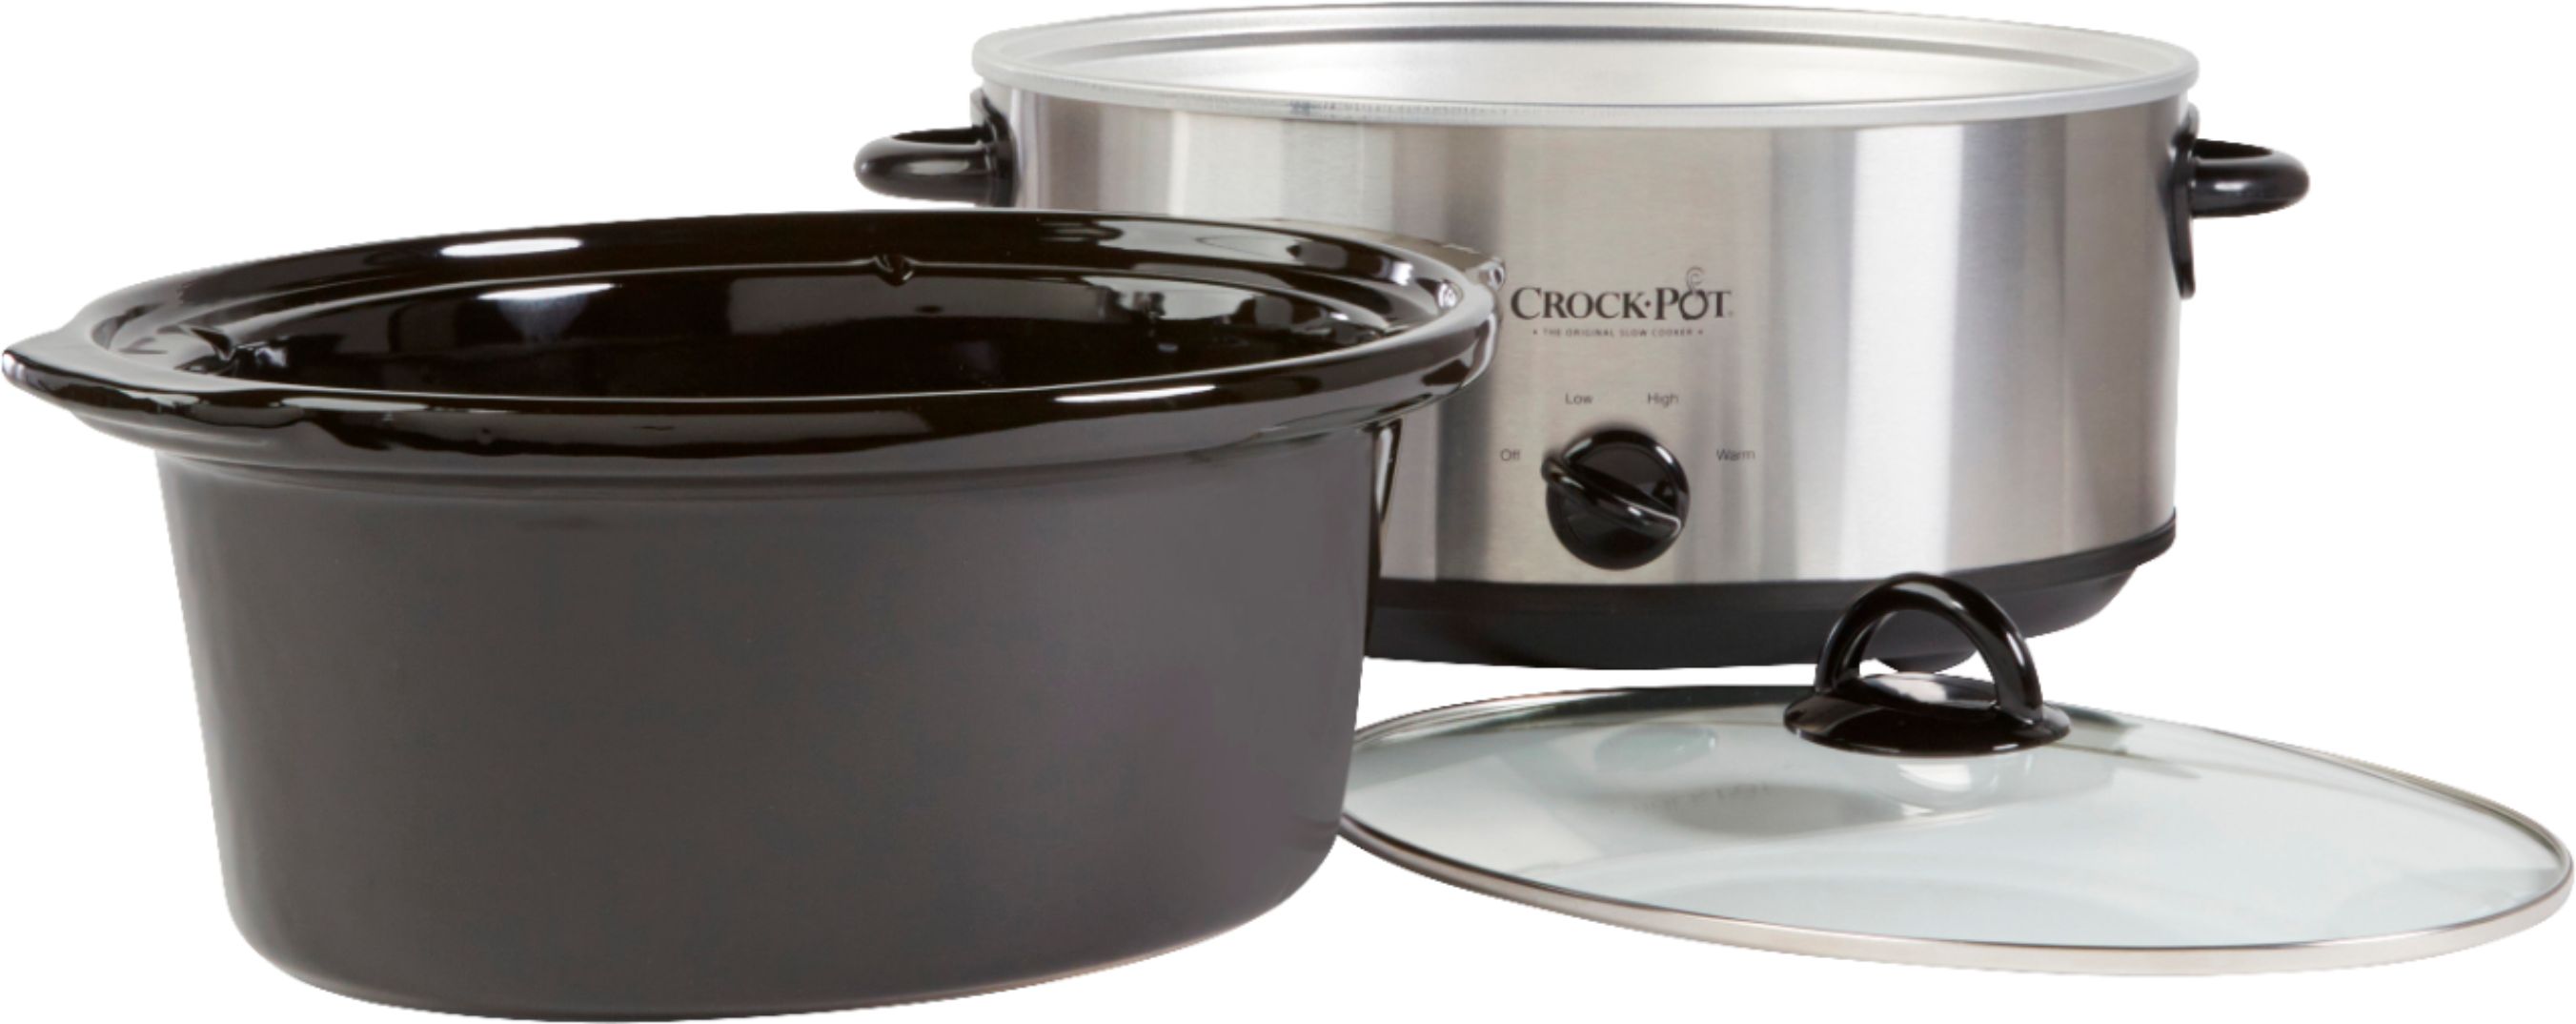 Customer Reviews: Crock-Pot 7-Quart Oval Manual Slow Cooker Stainless Crock Pot 7 Quart Oval Manual Slow Cooker Stainless Steel